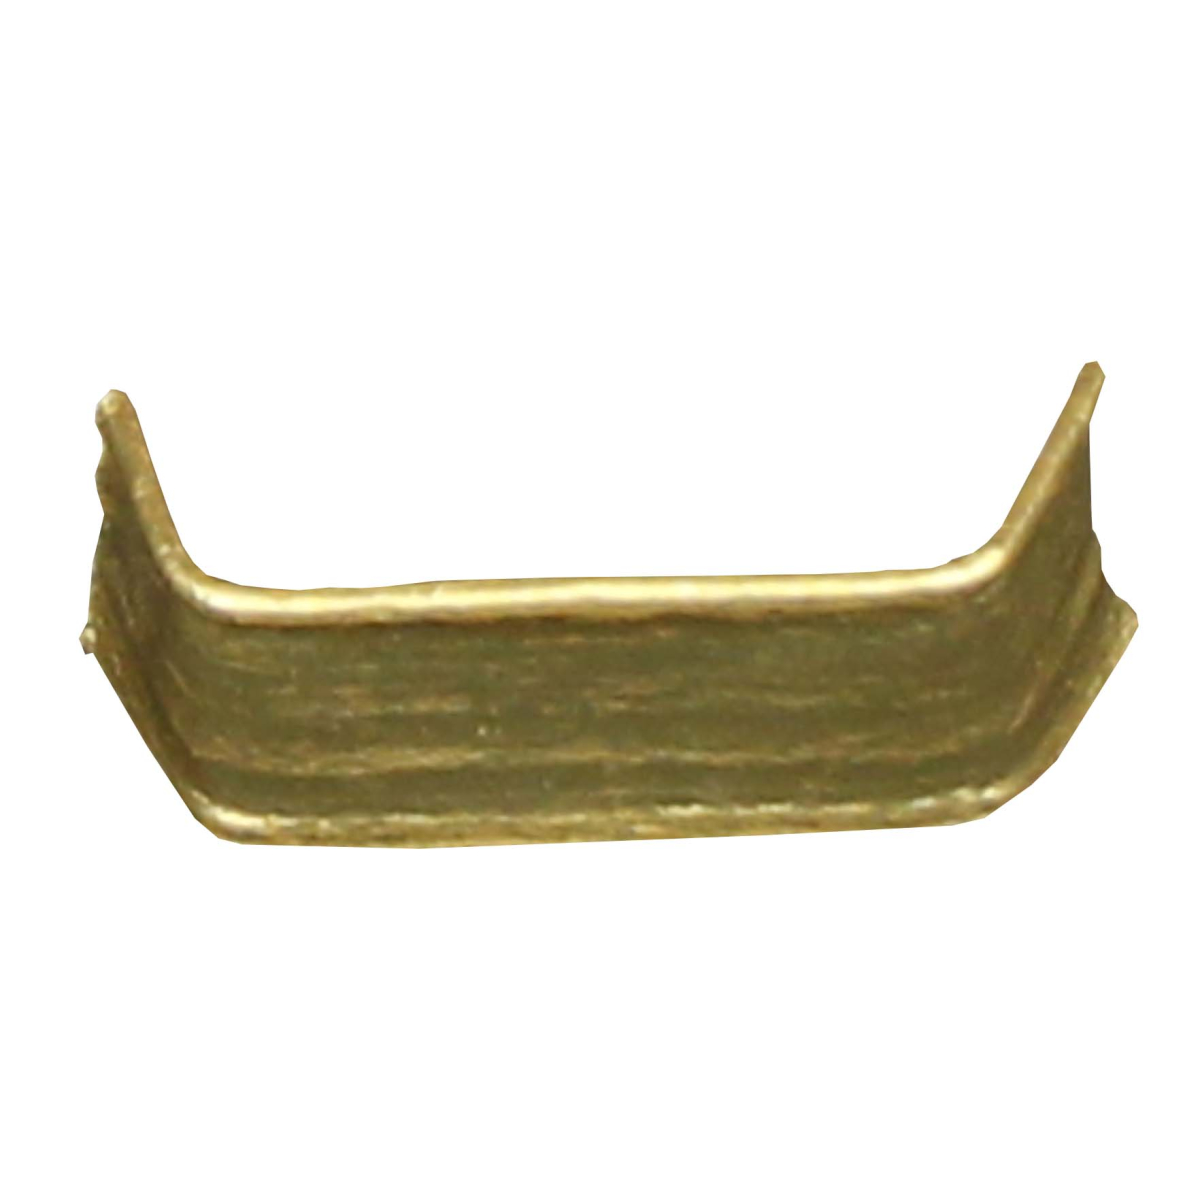 CLIPSE vorgebogen in  u-Form | gold
55 mm x 8 mm / 2-Draht 0,50 mm